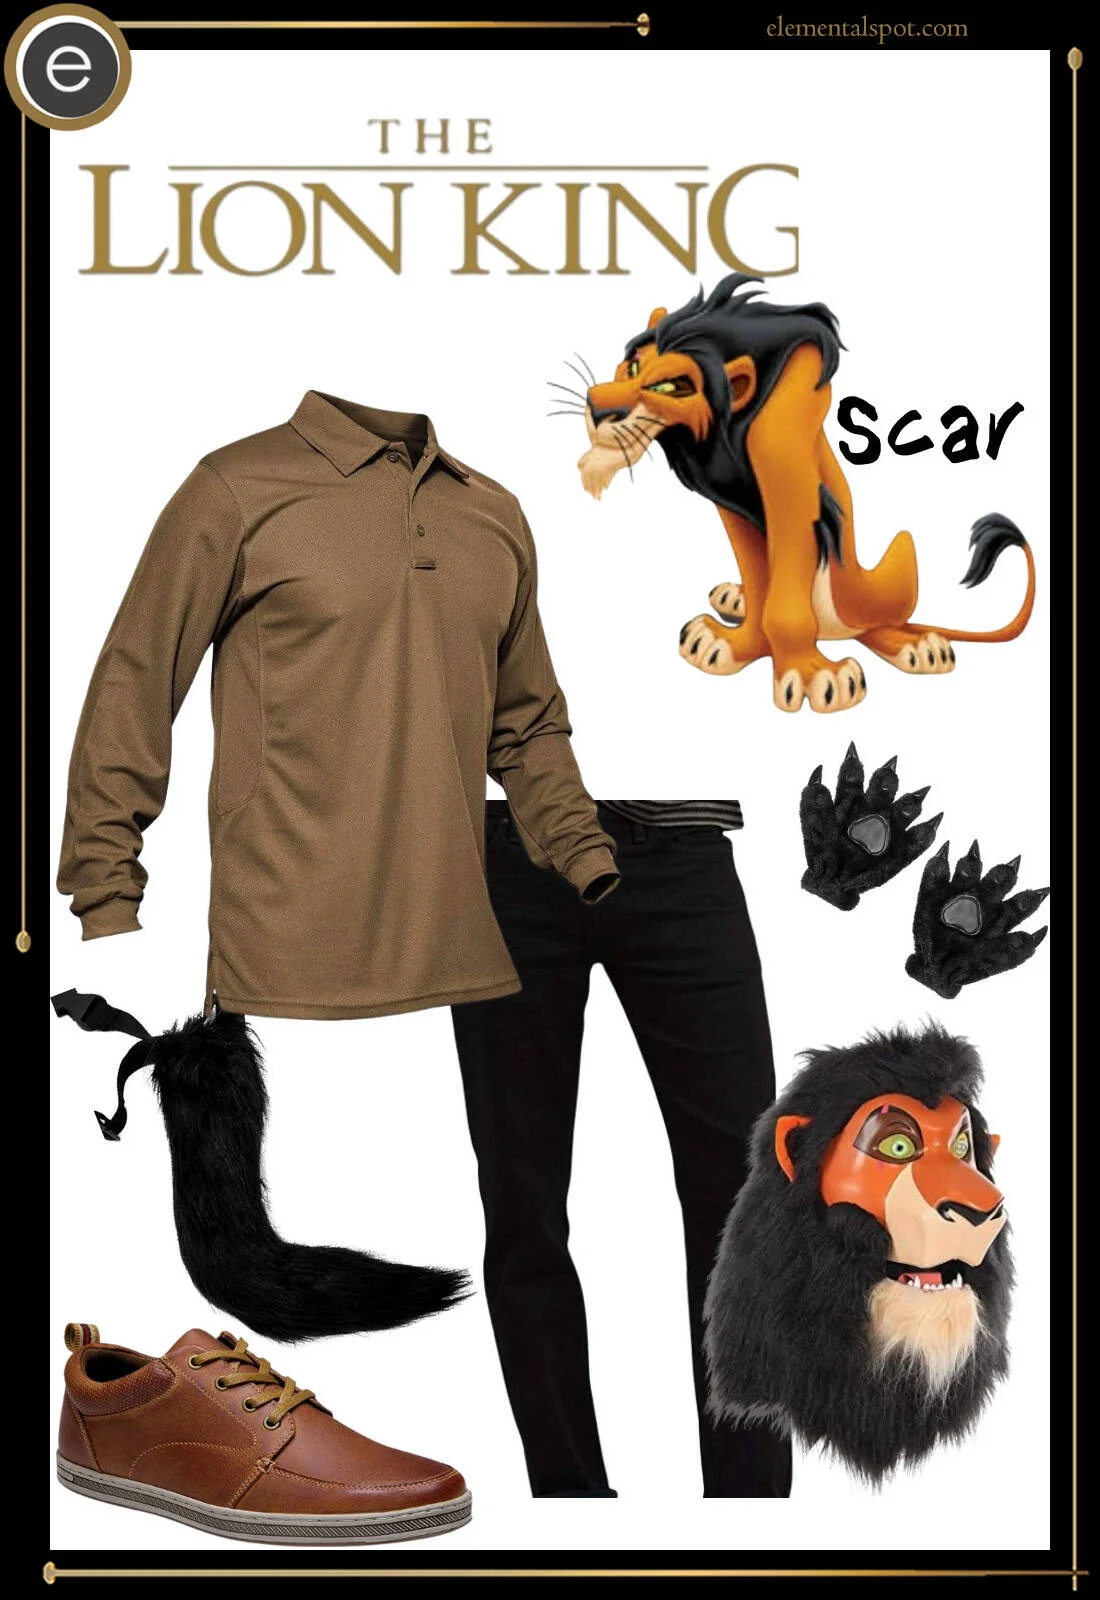 Dress Up Like Scar from The Lion King - Elemental Spot